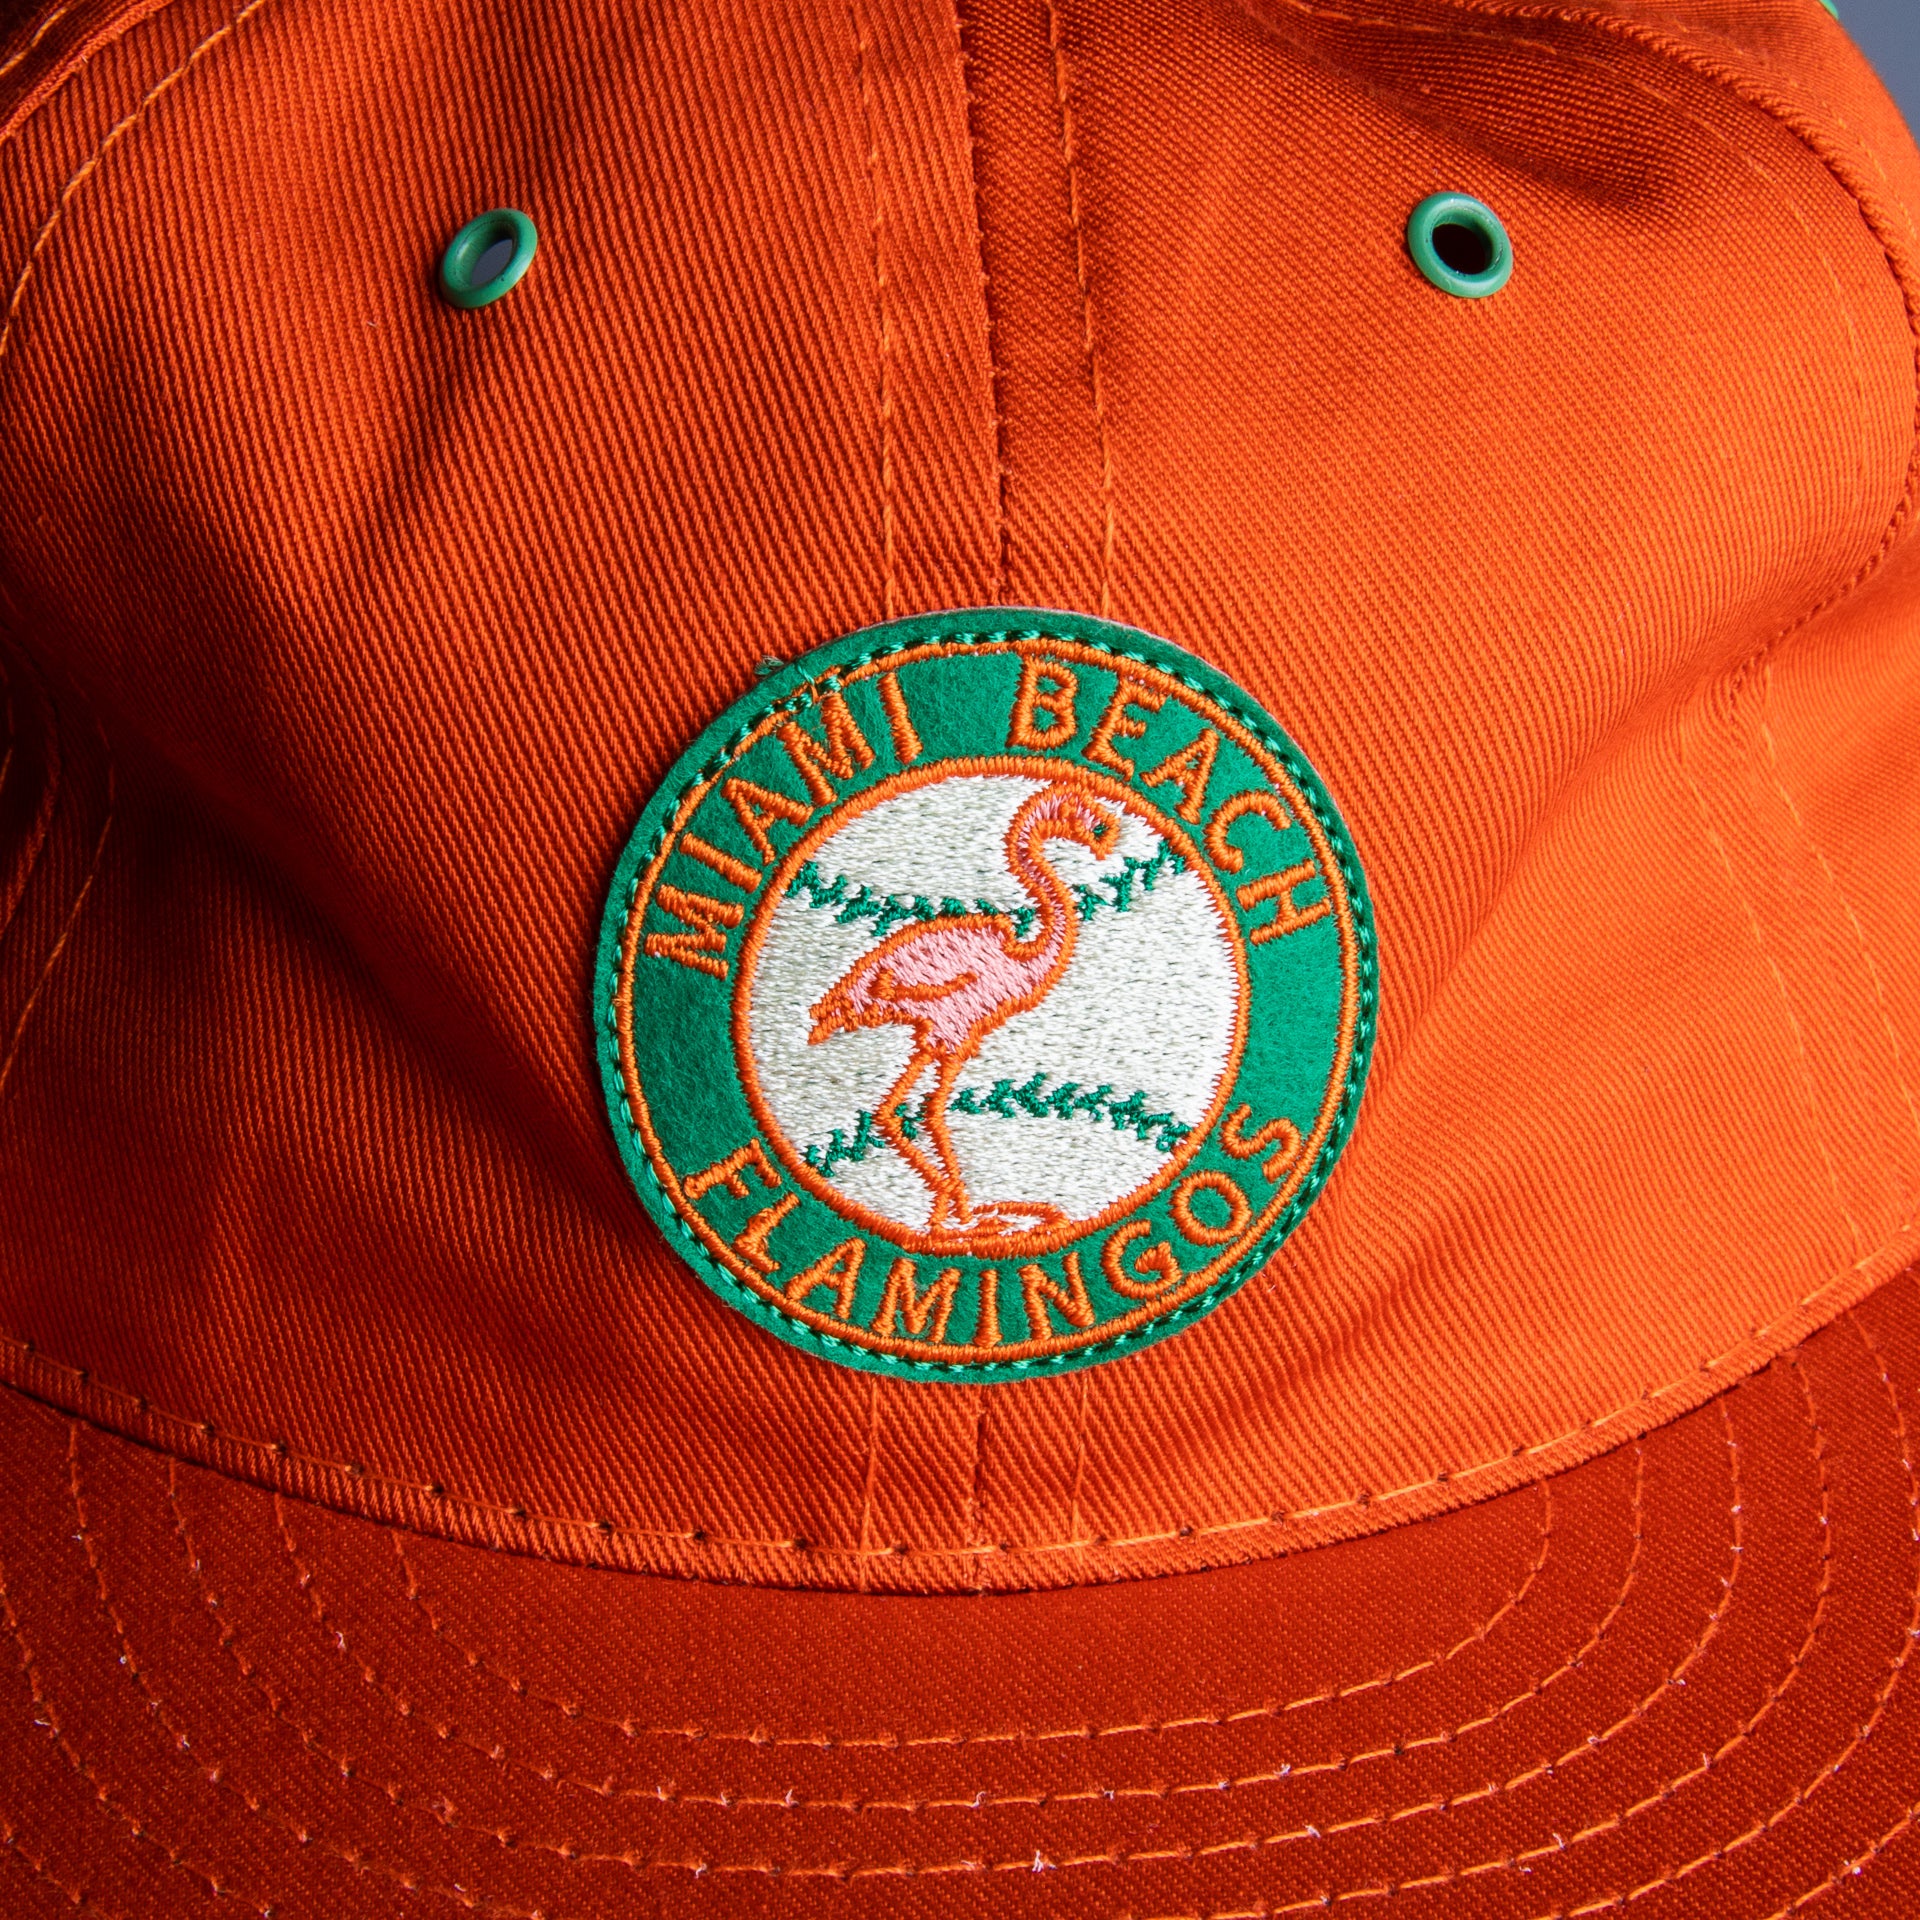 Ebbets Miami Beach Flamingo&#39;s Cotton twill Ballcap